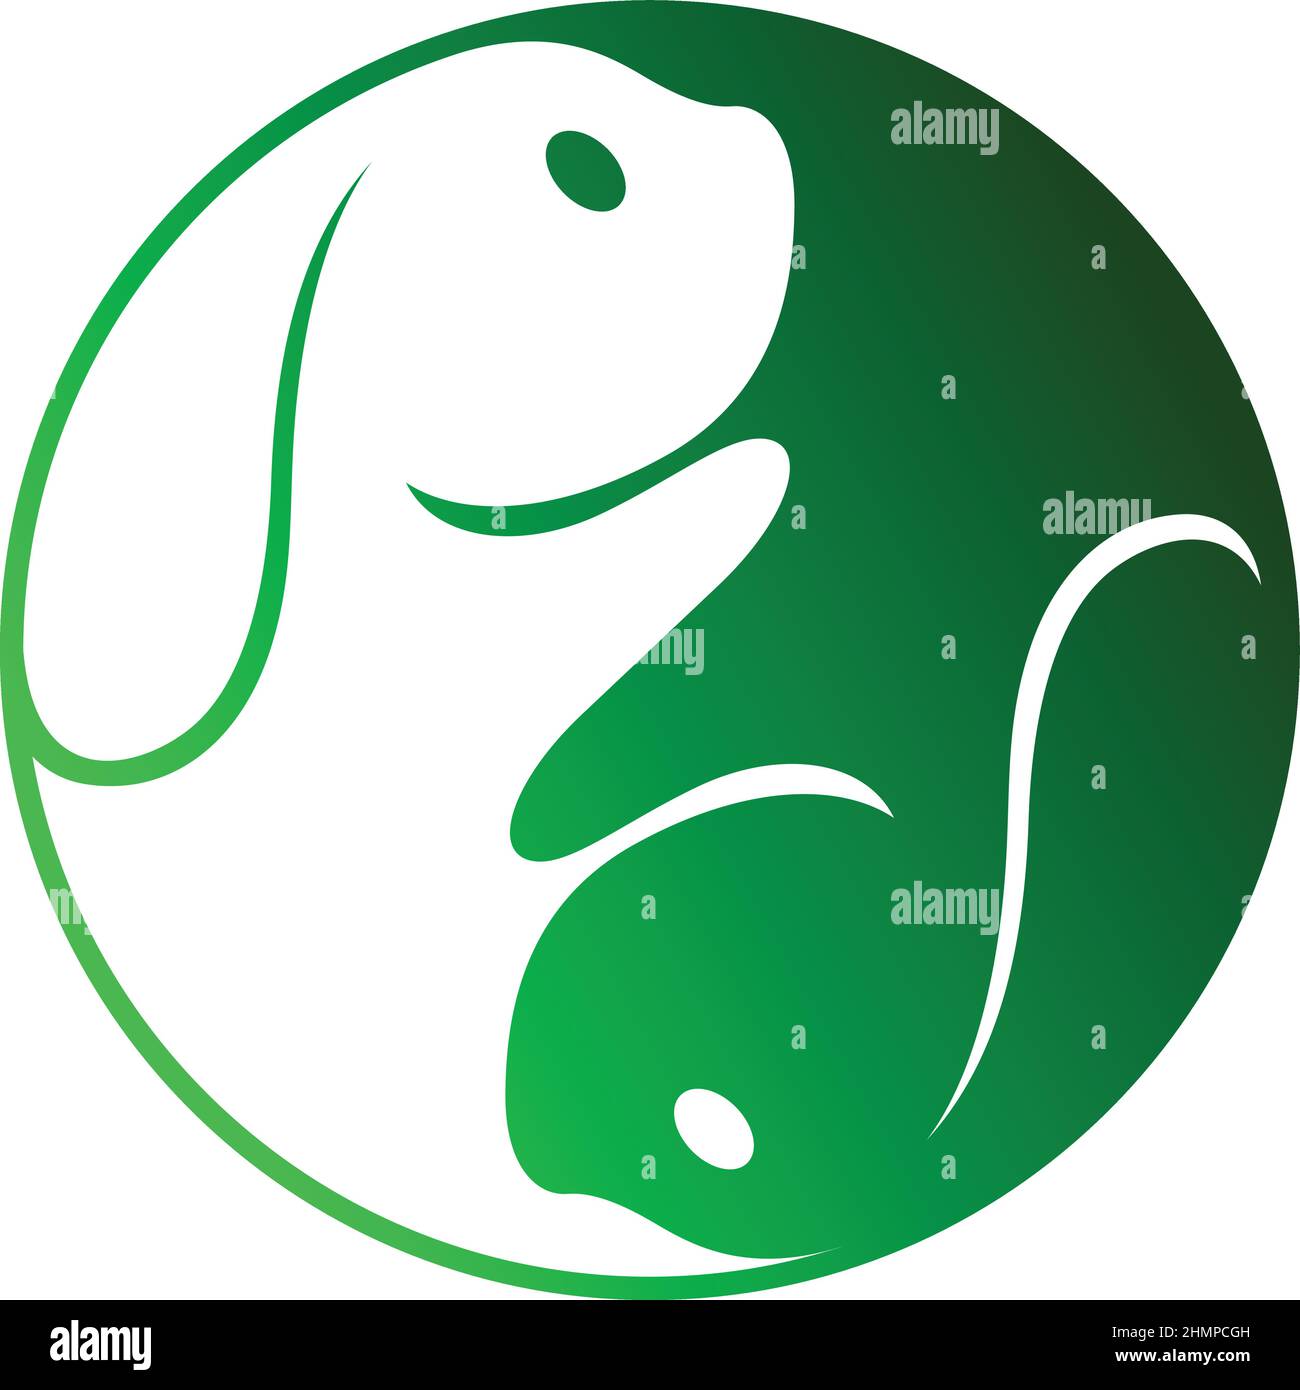 Cute Abstract Yin Yang Sign Two Stock Vector (Royalty Free